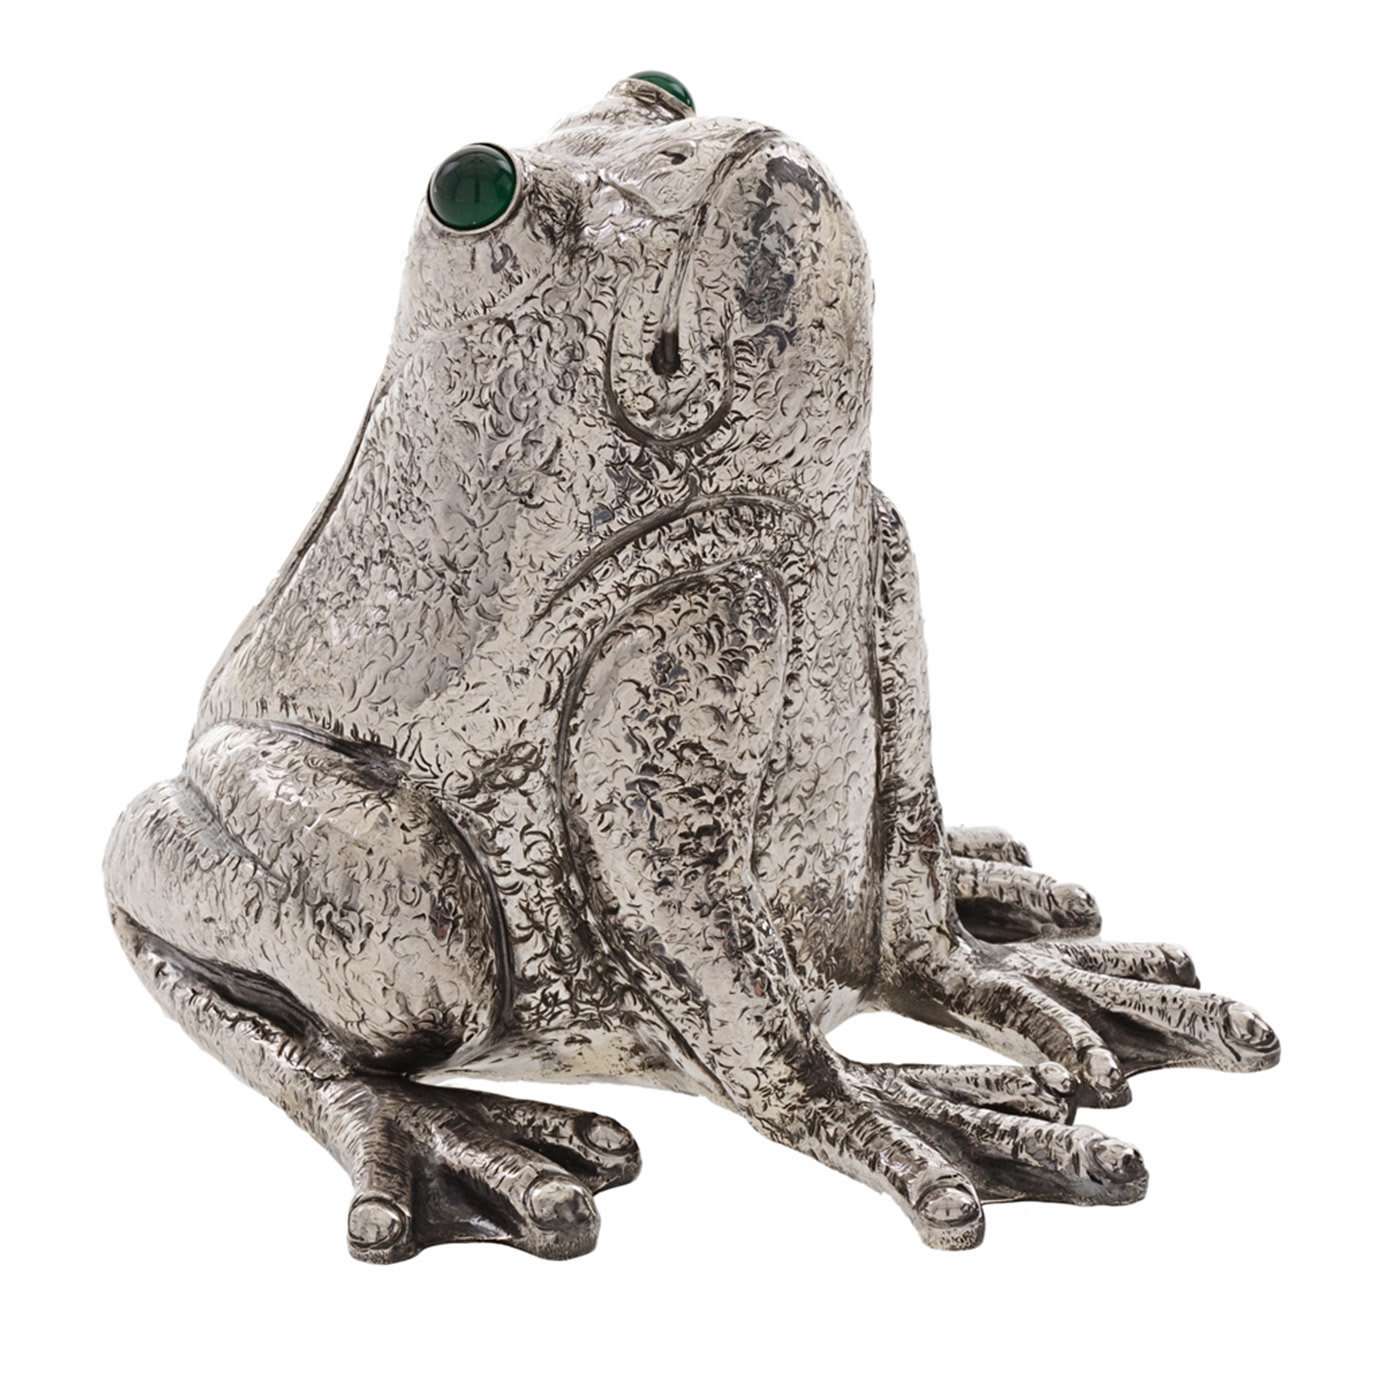 The Frog Sterling Silver Lighter - Fratelli Lisi